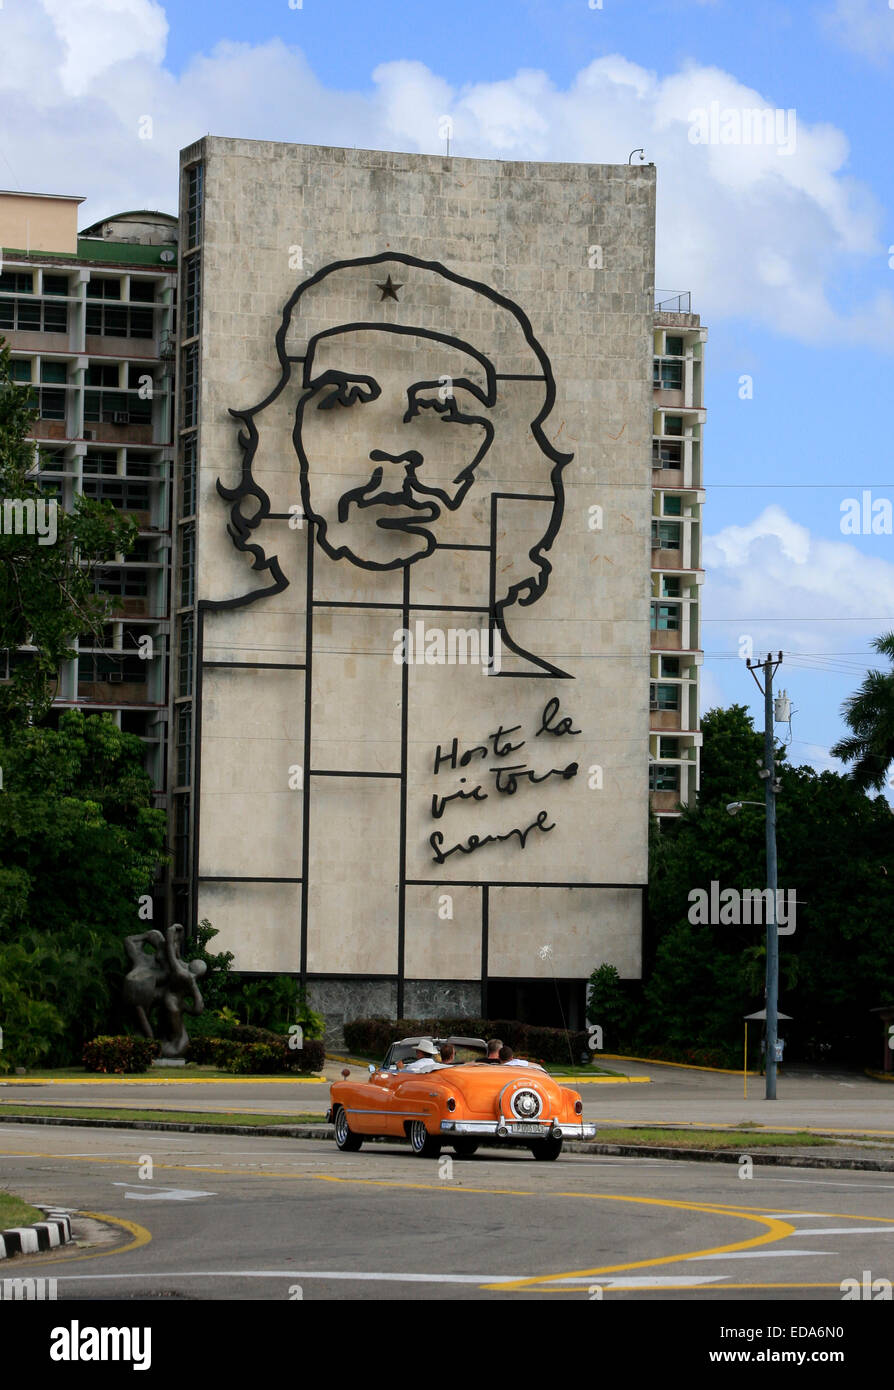 Old American Buick car driving in front of the Ministry of Interior Building in Plaza de la Revolucion, Havana, Cuba Stock Photo